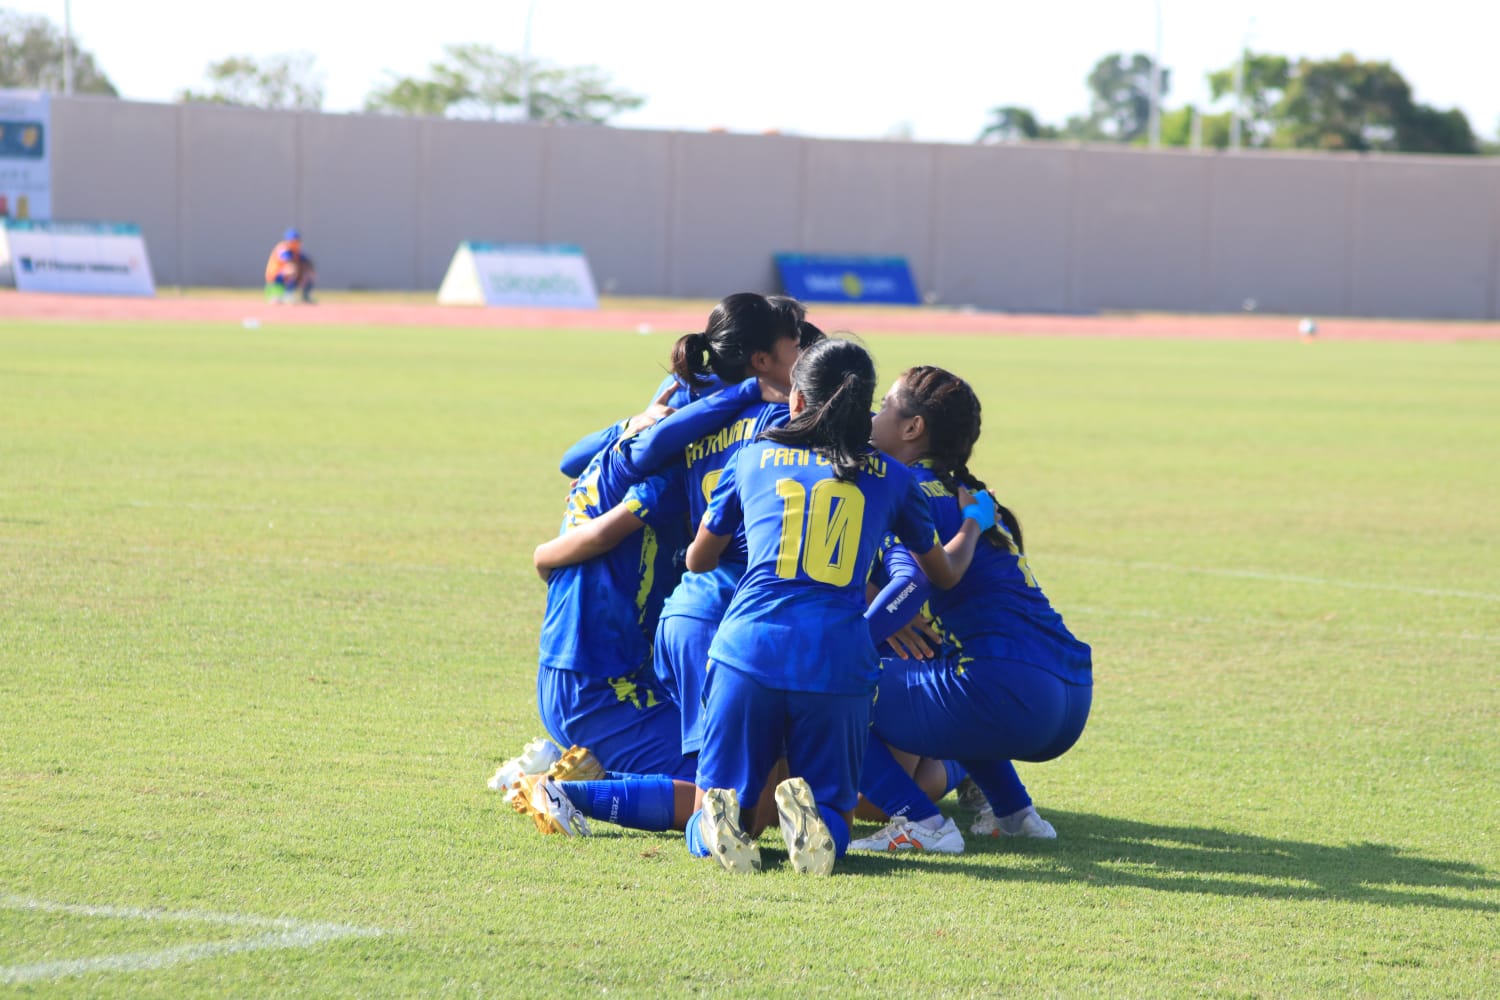 Celebrasi gol anak-anak pasukan biru, Jabar. (Foto: Humas PB PON Papua/Jhon)